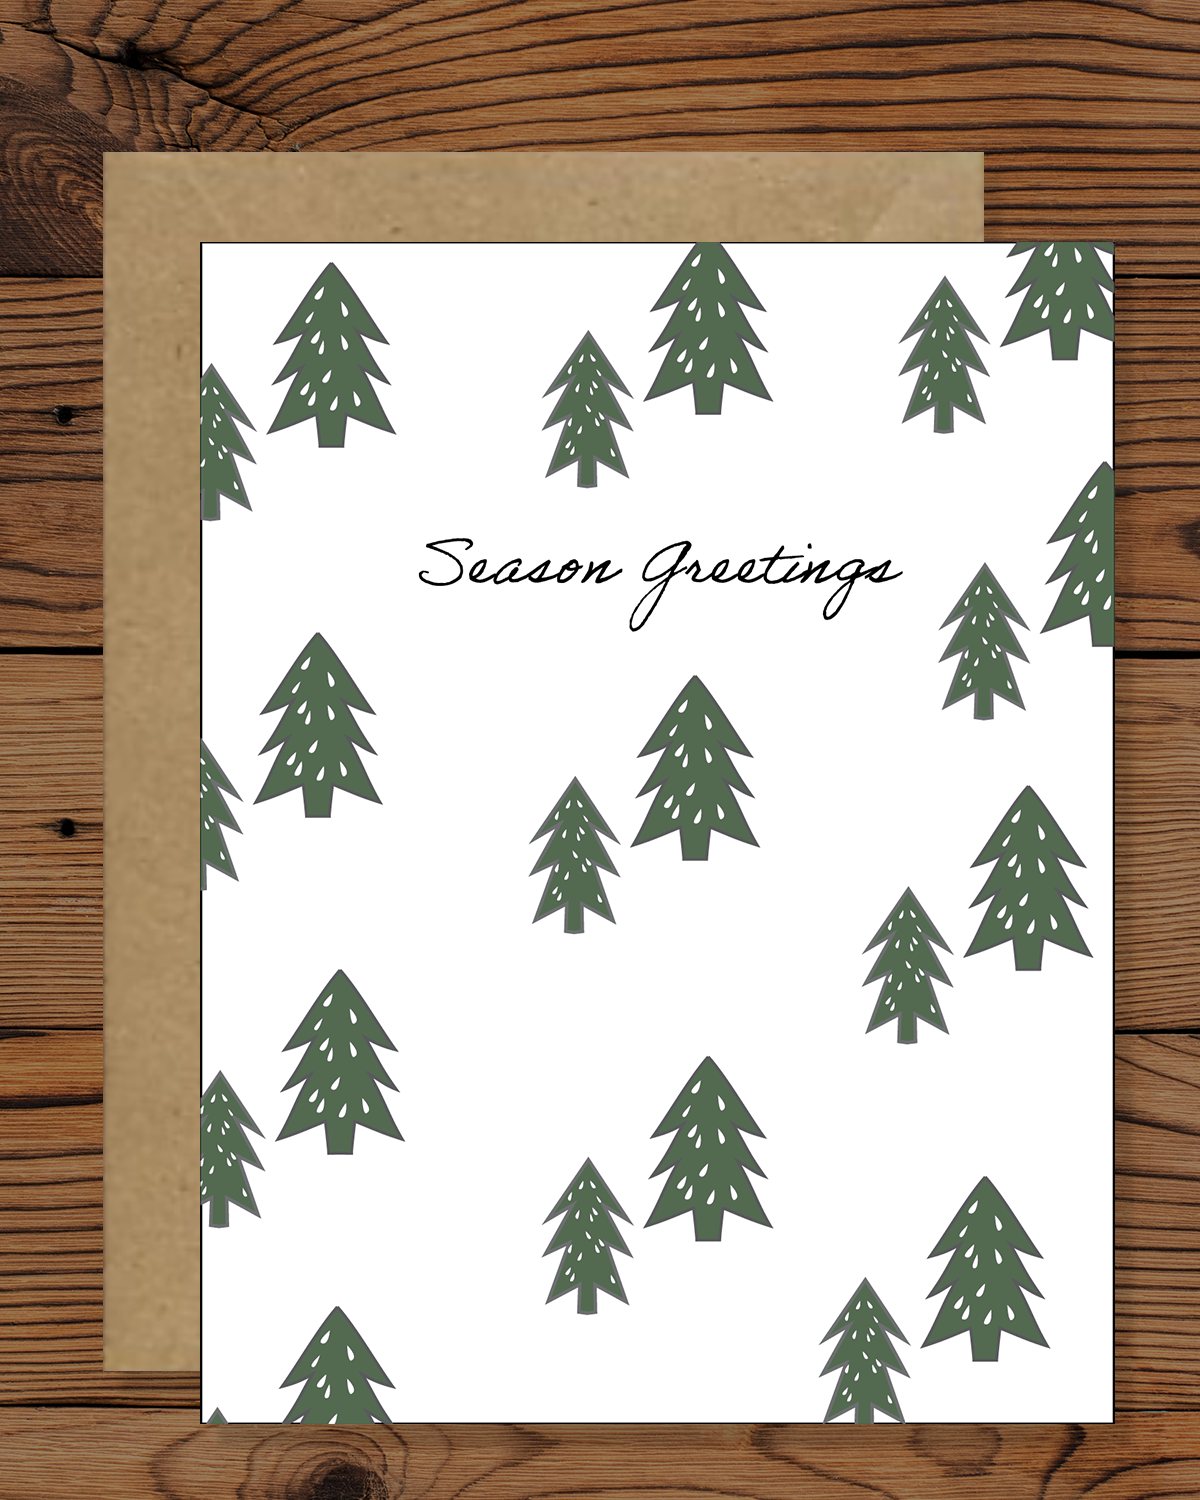 Minimalist Christmas Tree Greeting Card | Simple Handmade Christmas Cards 